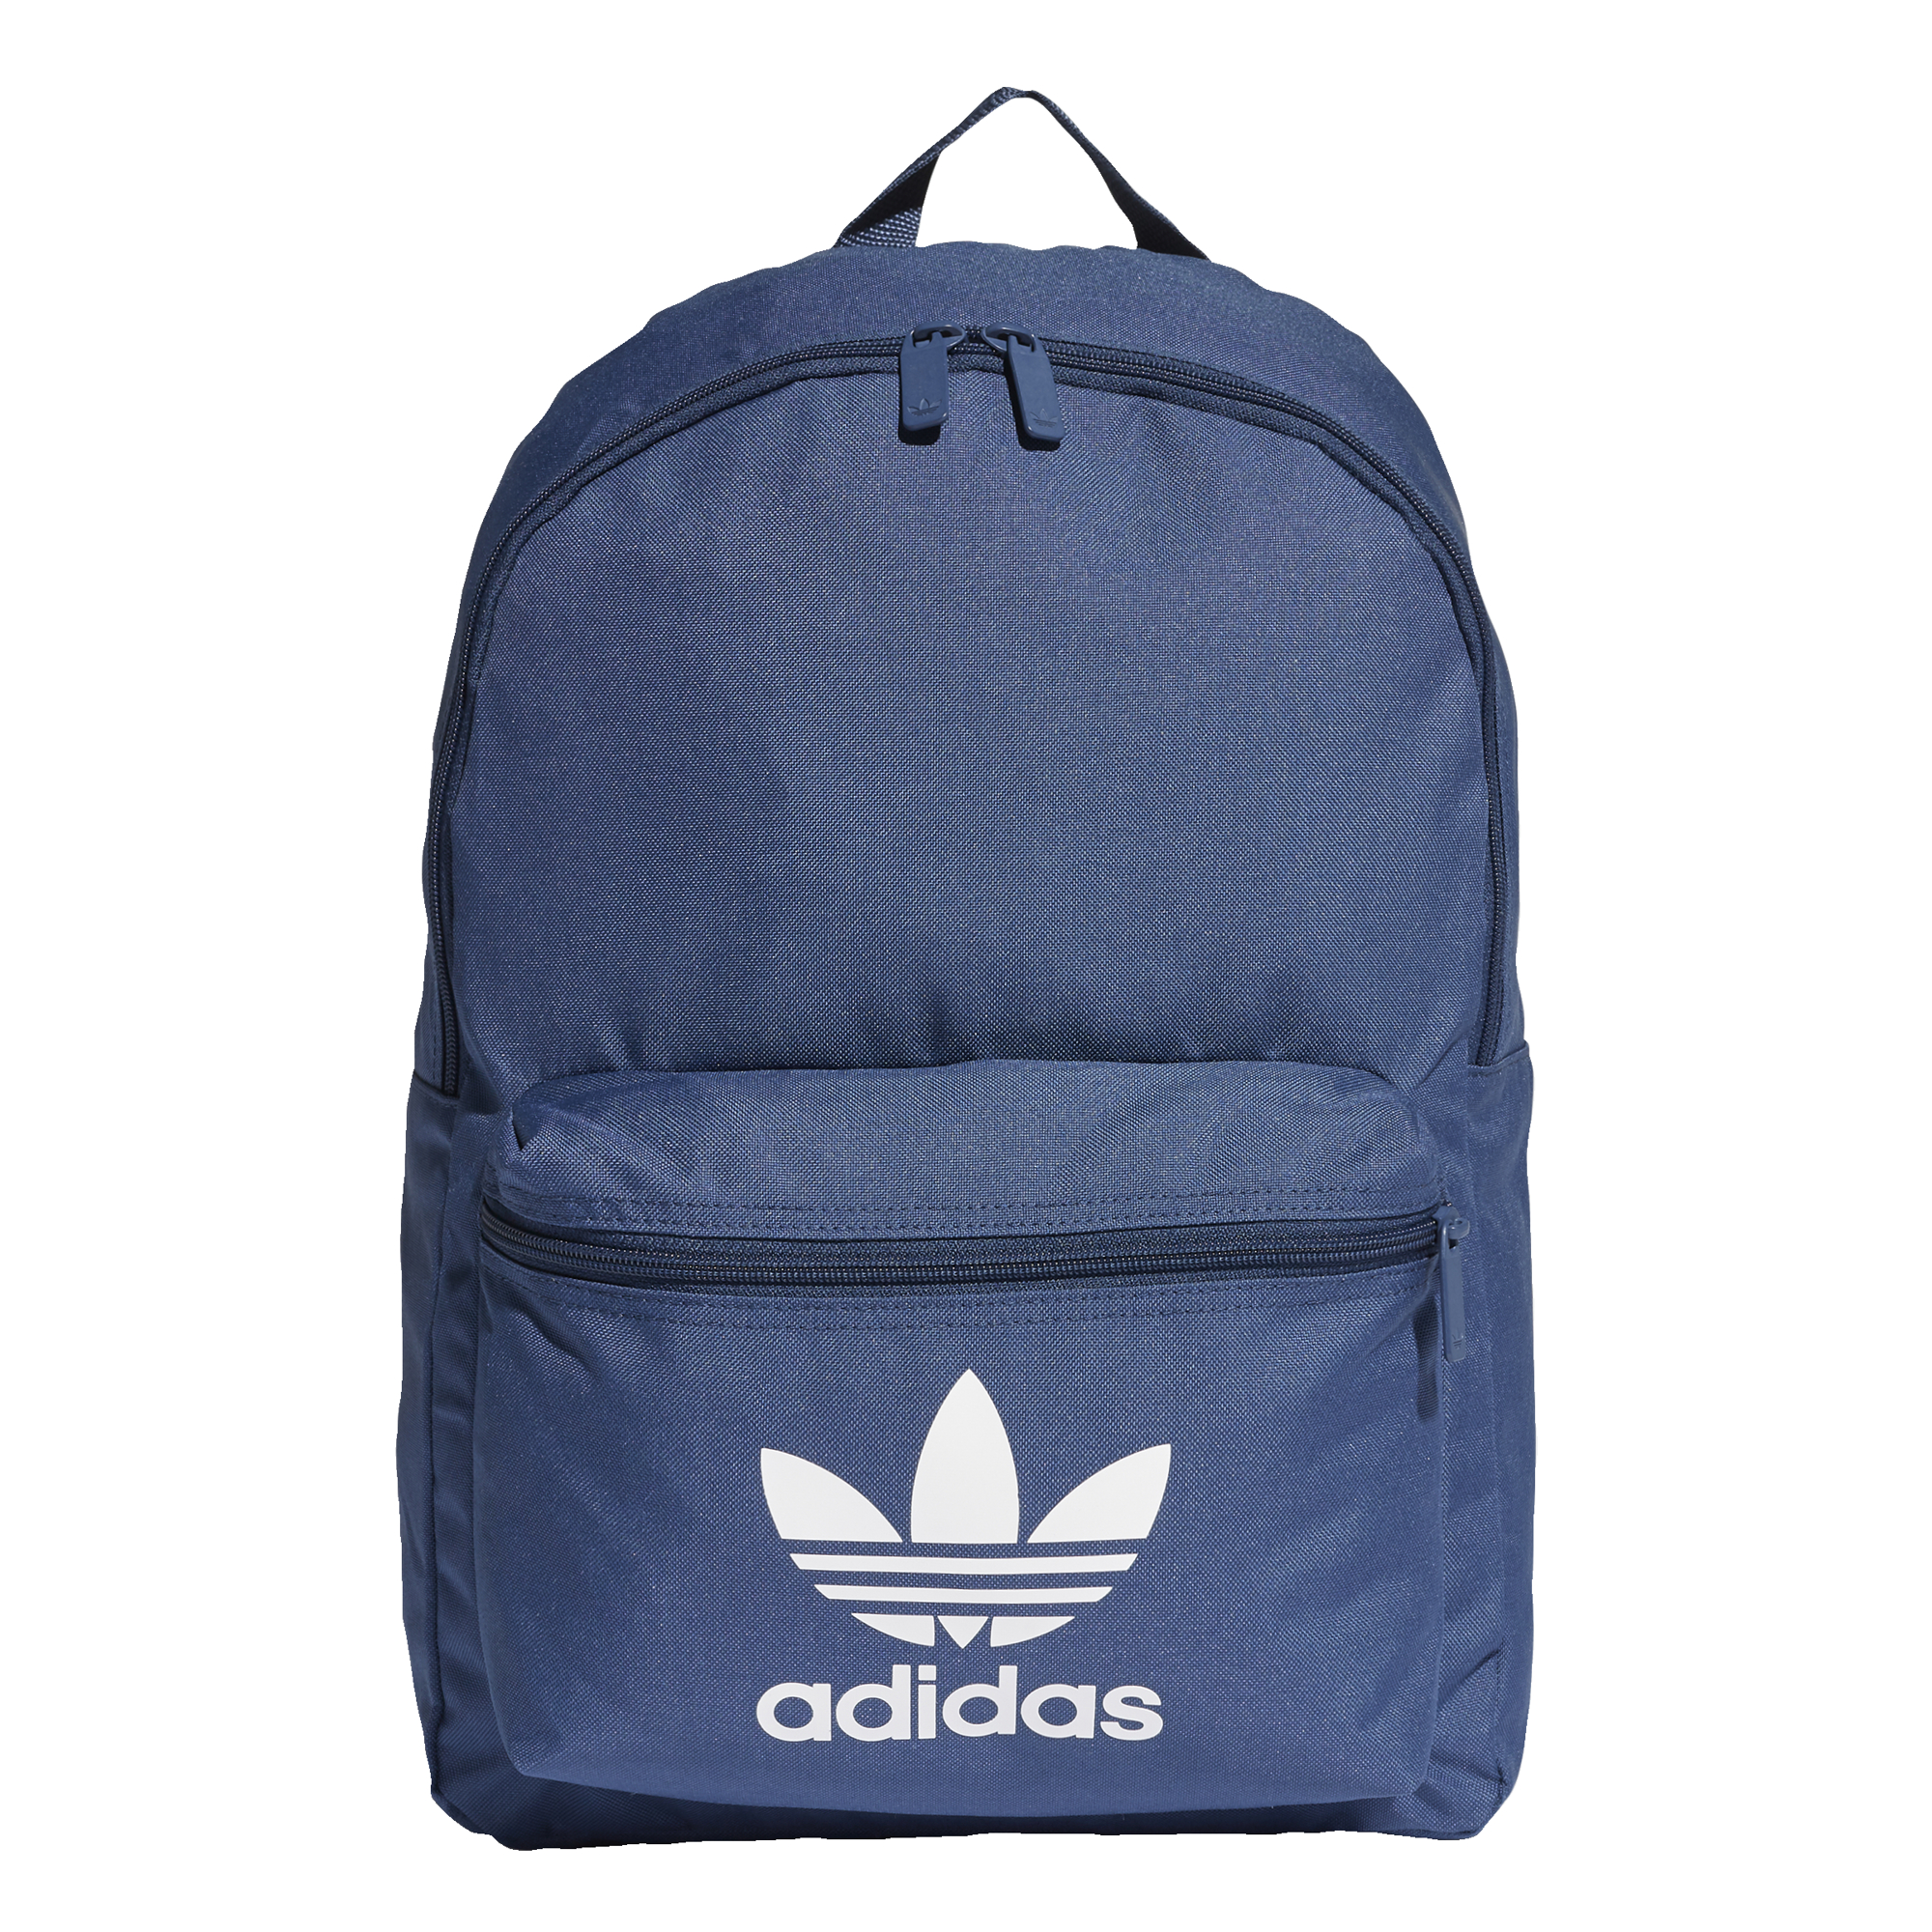 adidas Adicolor Classic Backpack Women's Bags | eBay